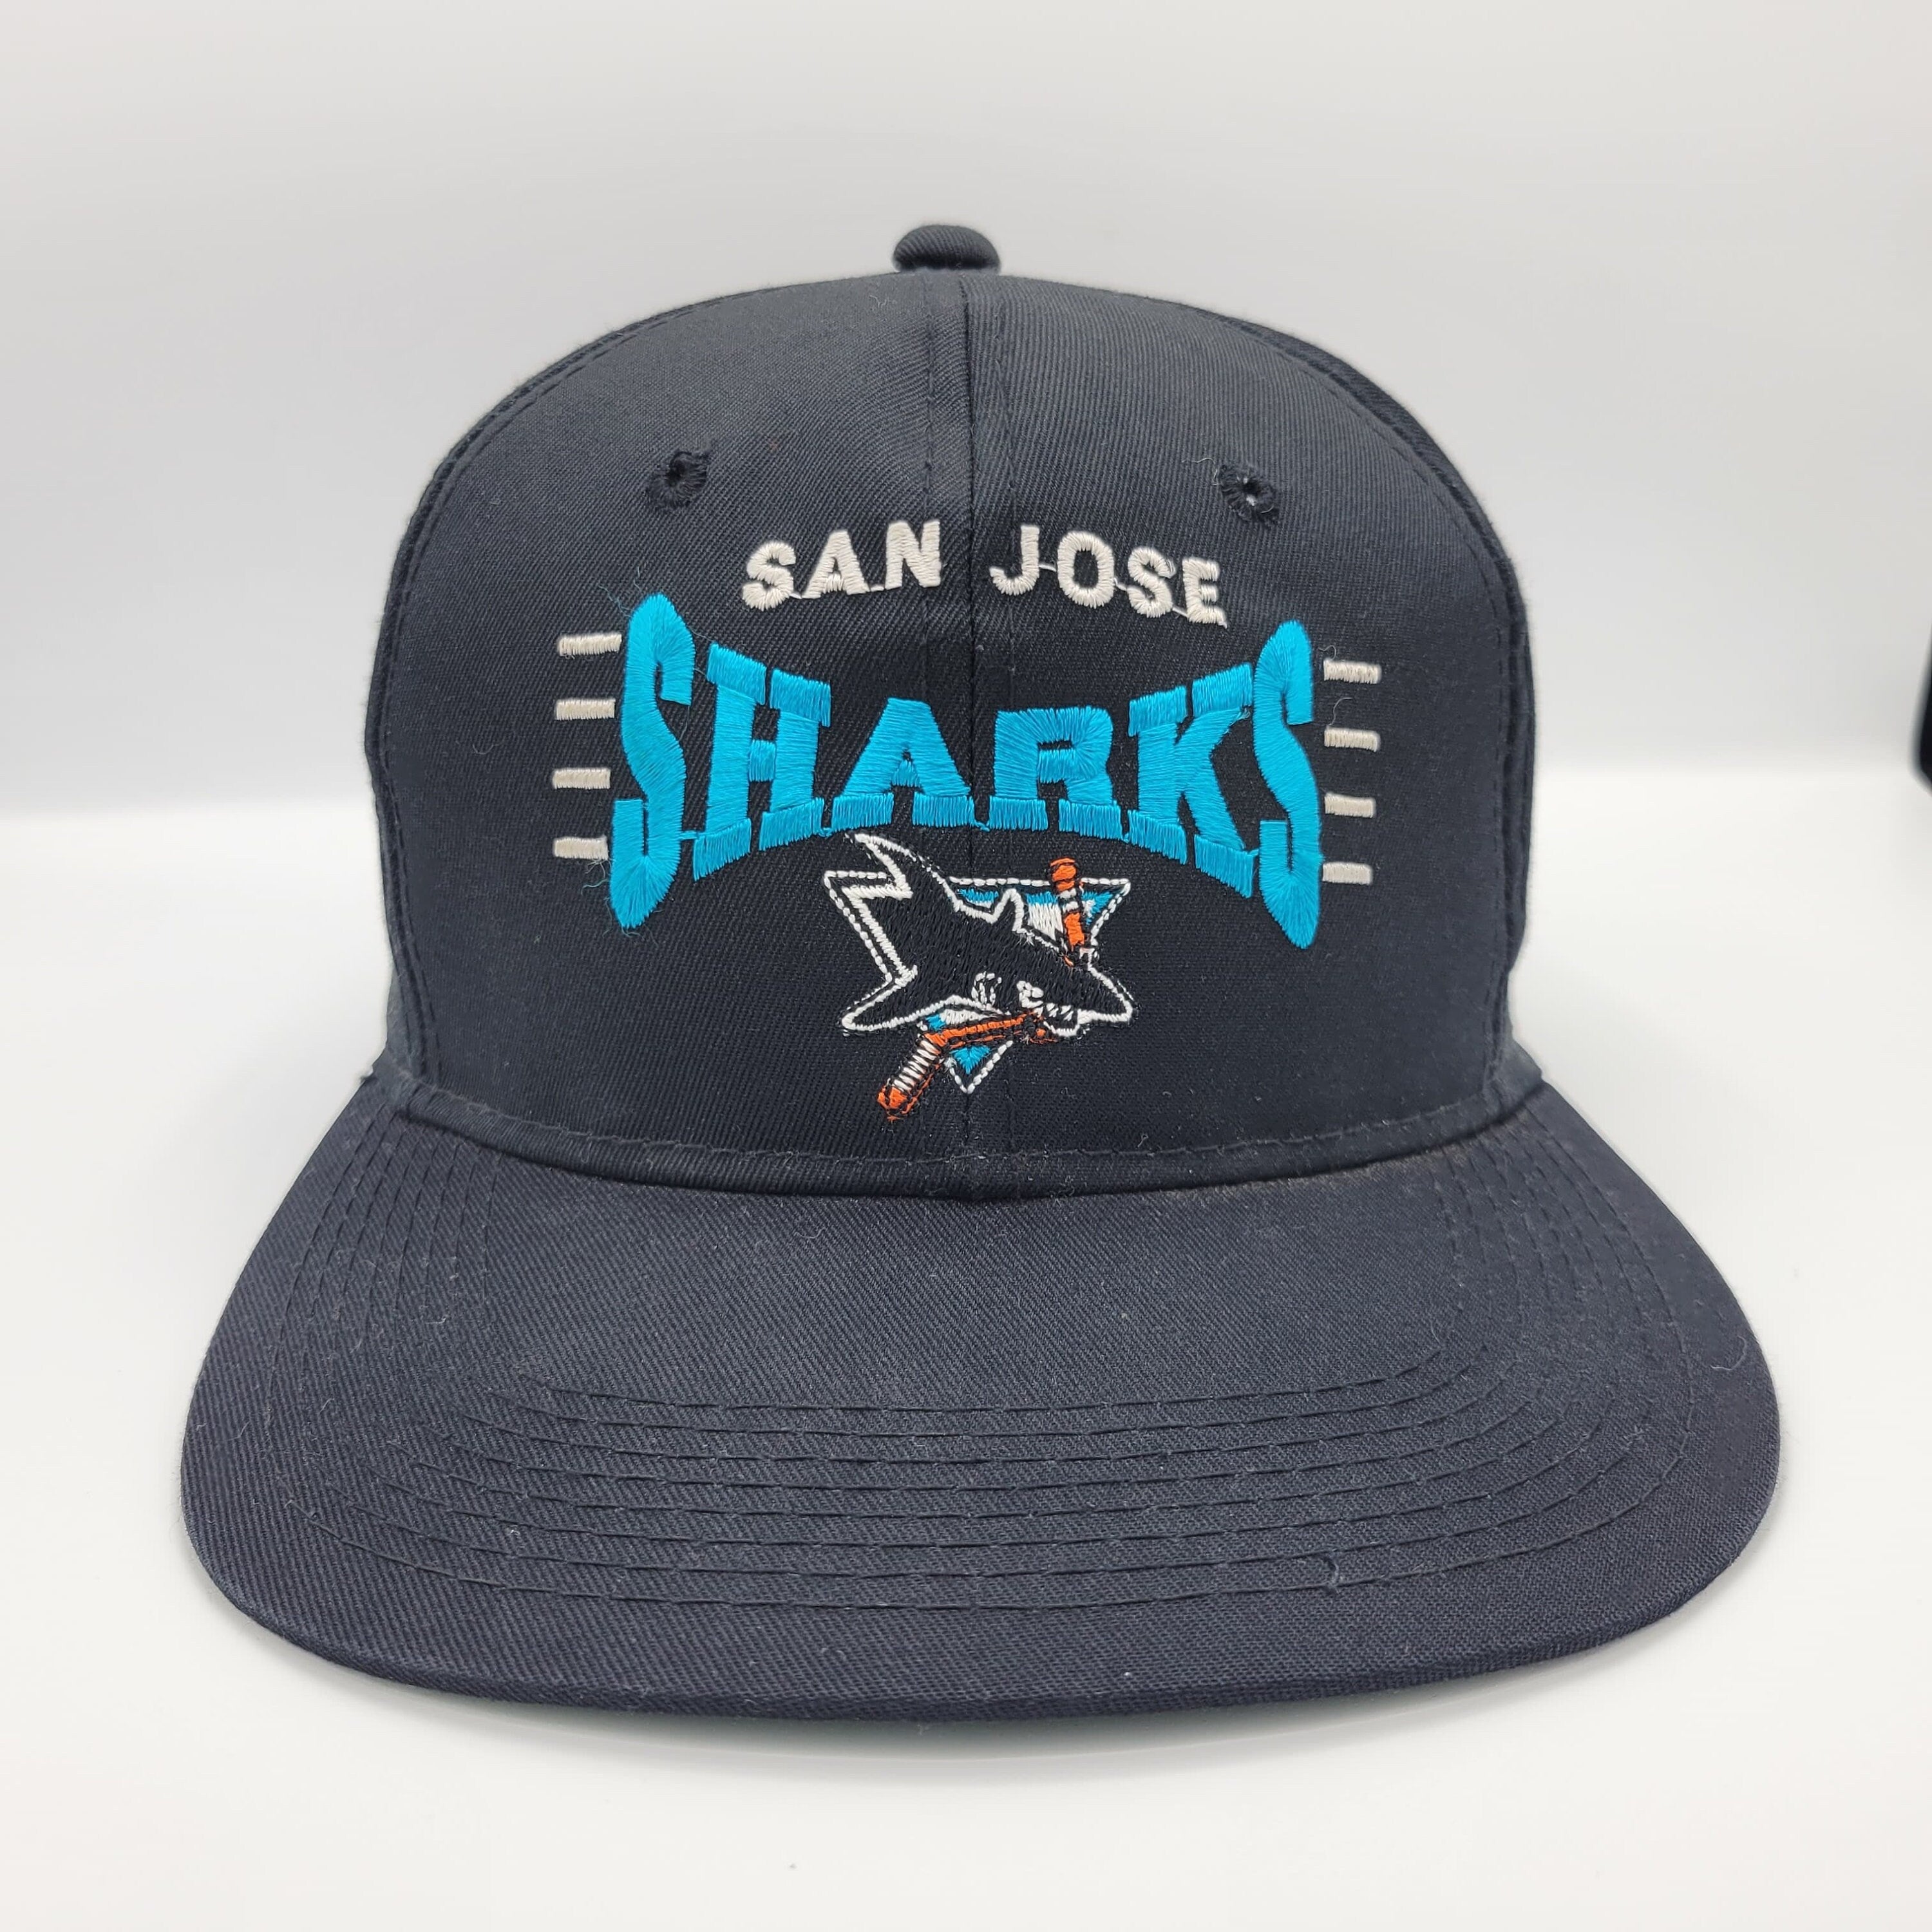 San Jose Sharks Hat Fanatics Authentic NHL Snapback Cap Black Gray Chrome  Flat